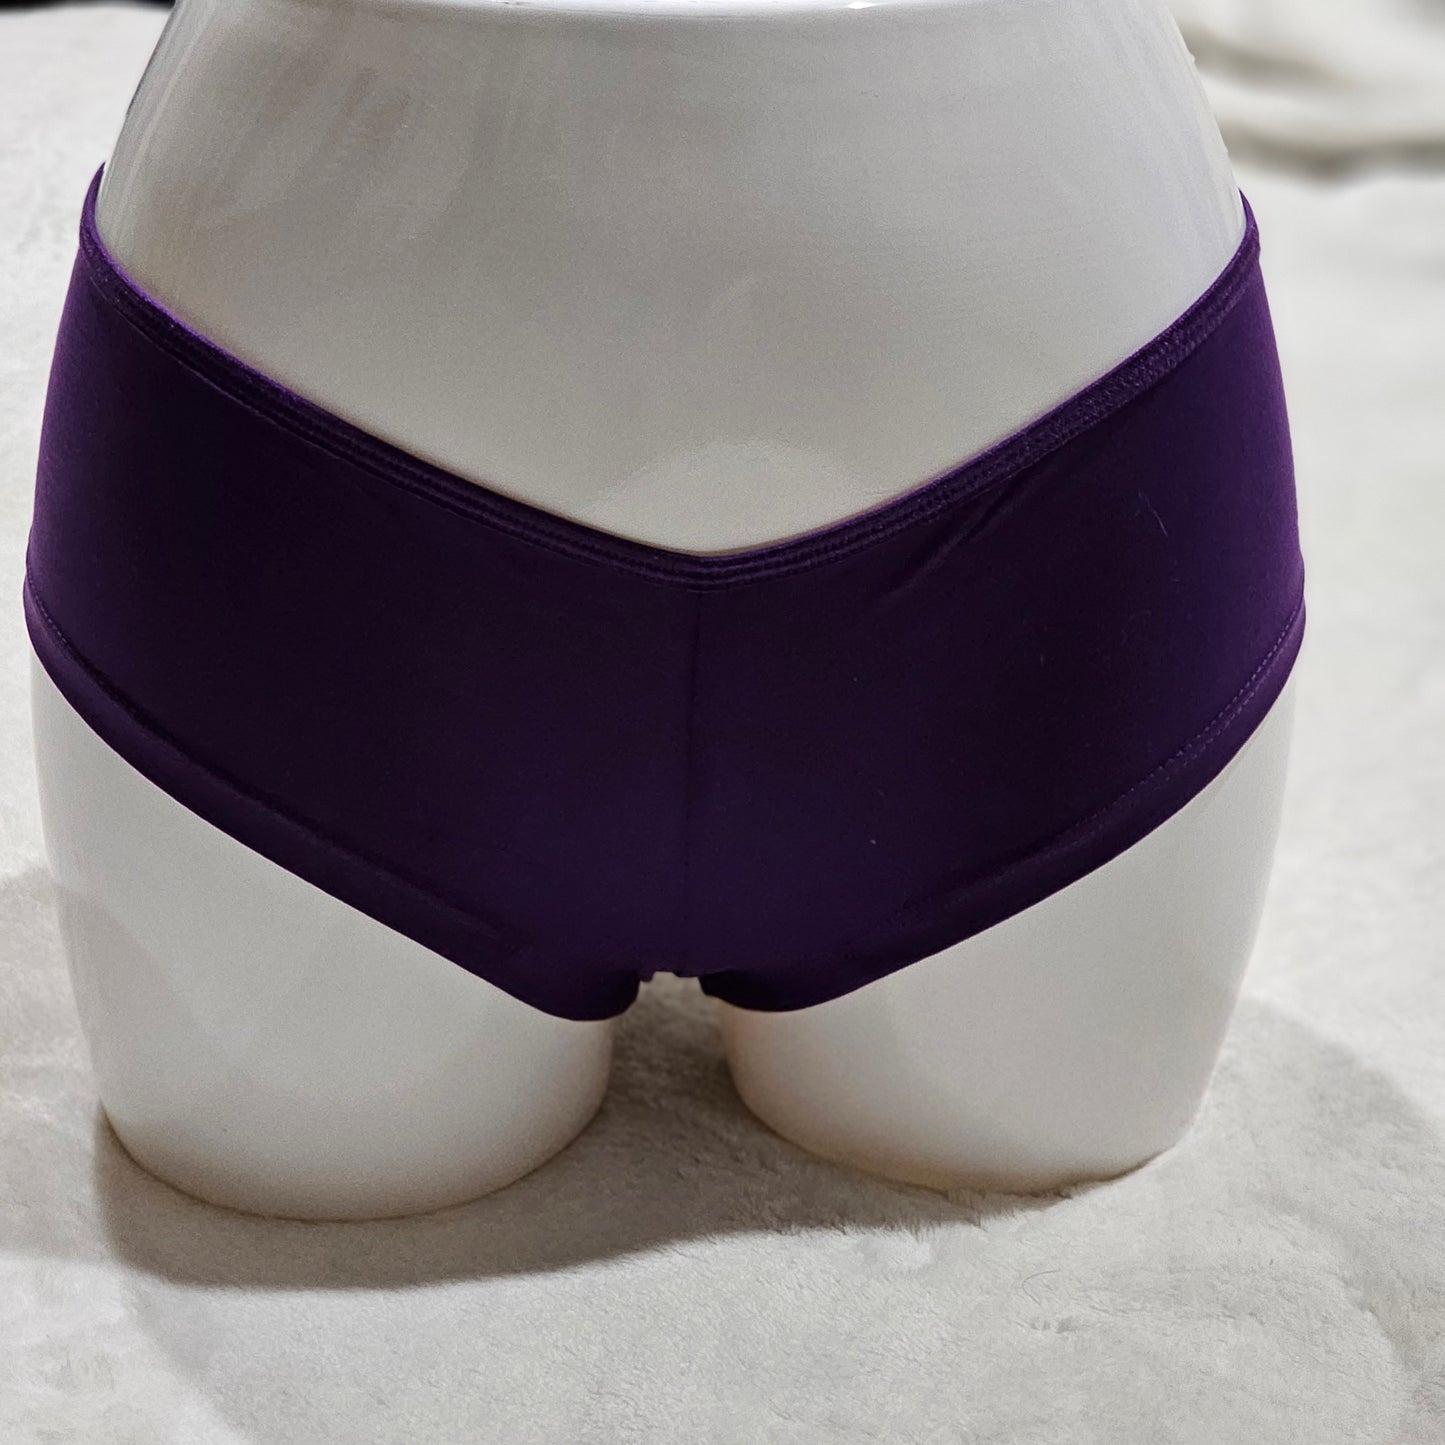 Royal Purple Panties | Let's Bone | Skelton Hands & Letter Graphics - Femfetti - Panties